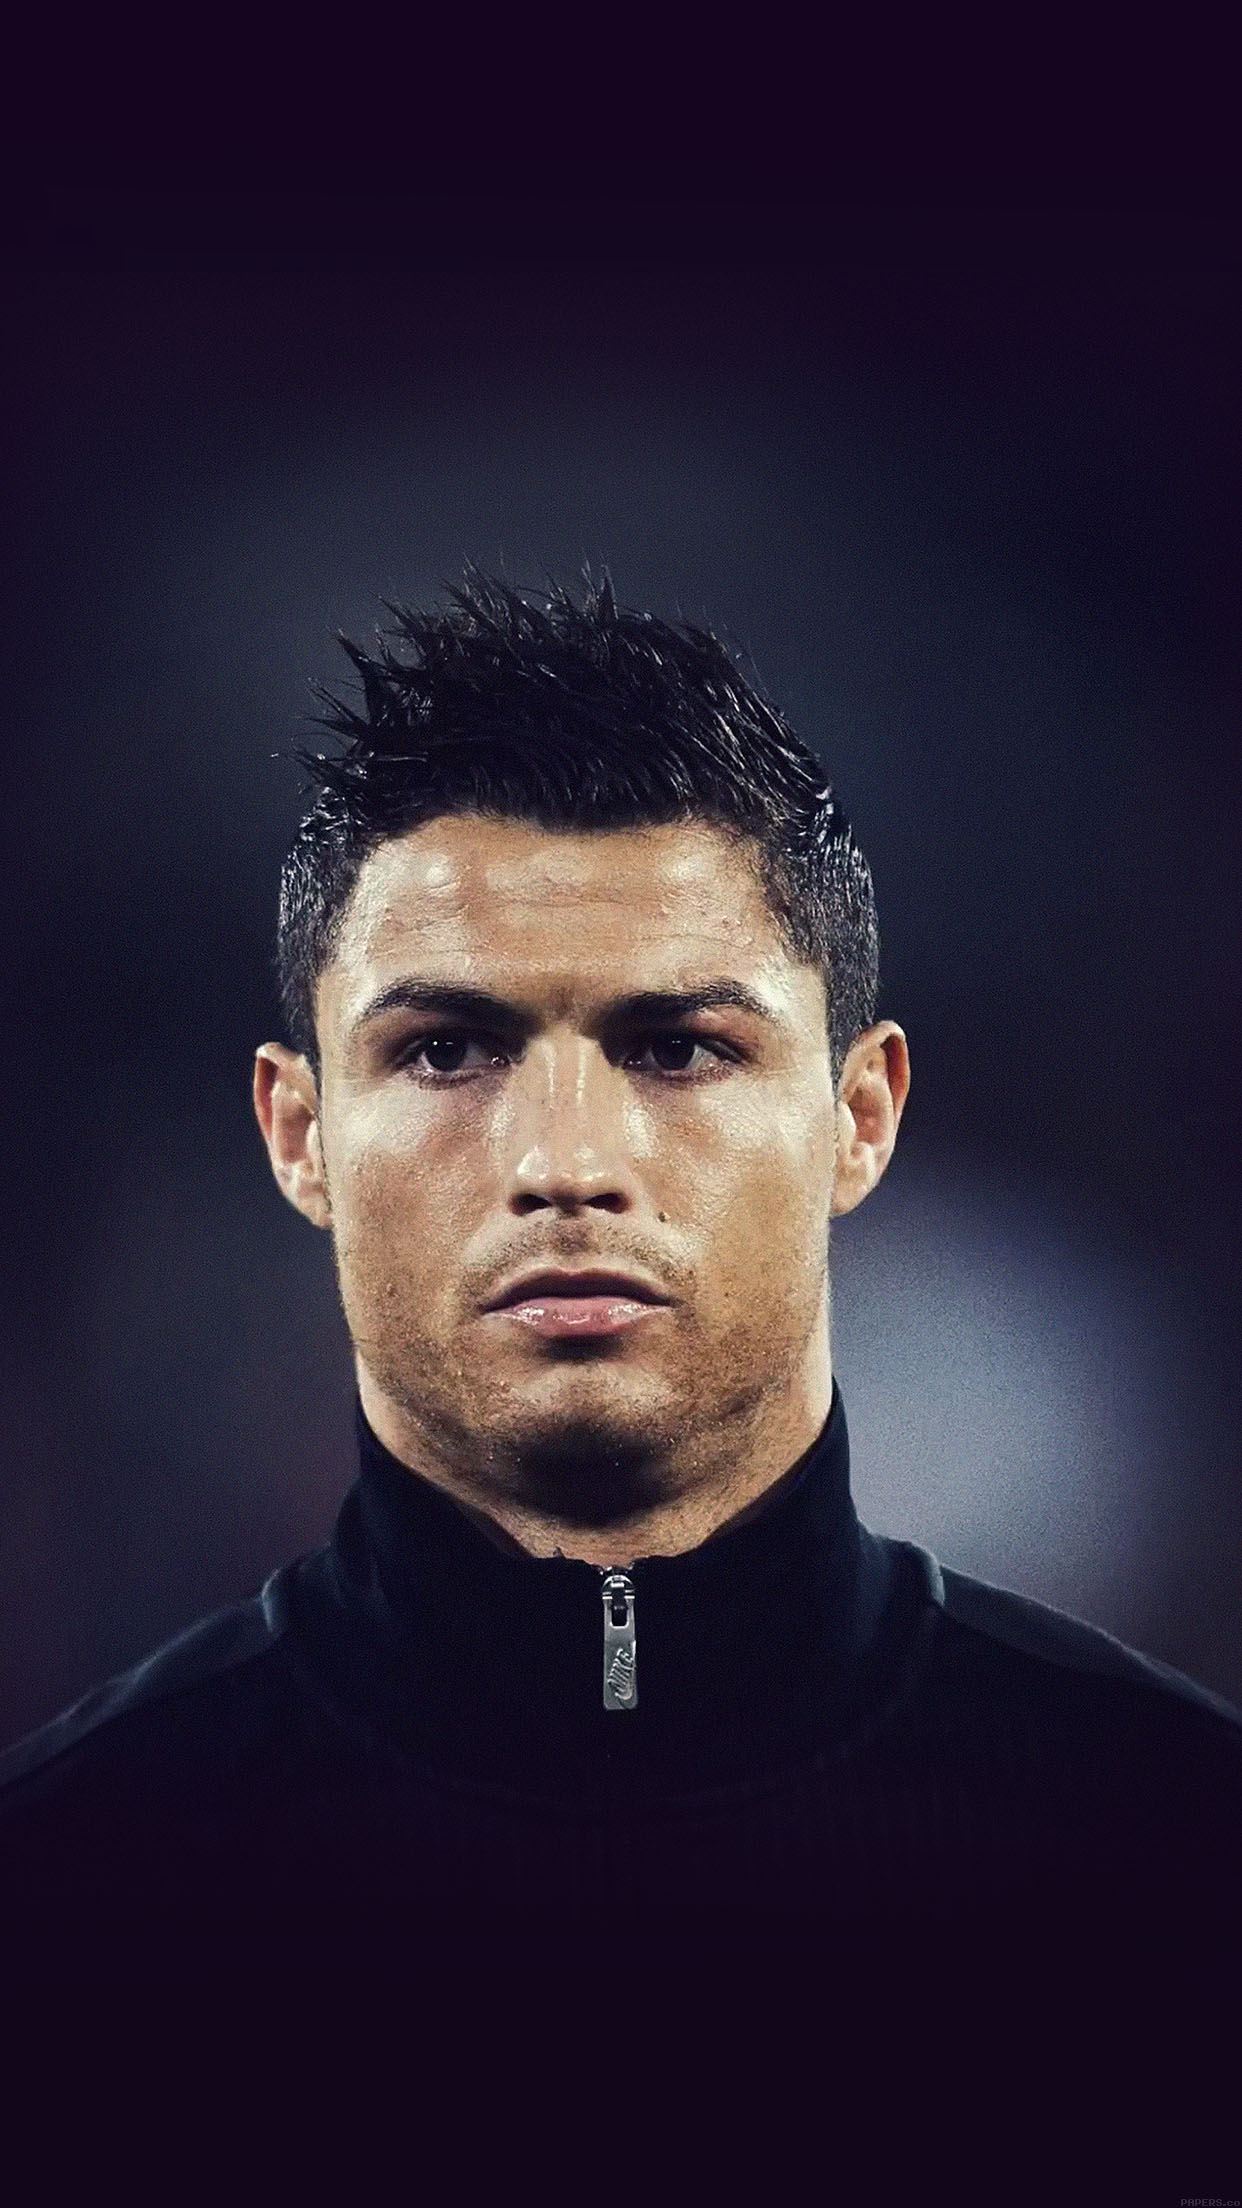 Cristiano Ronaldo Sports Face Android wallpaper